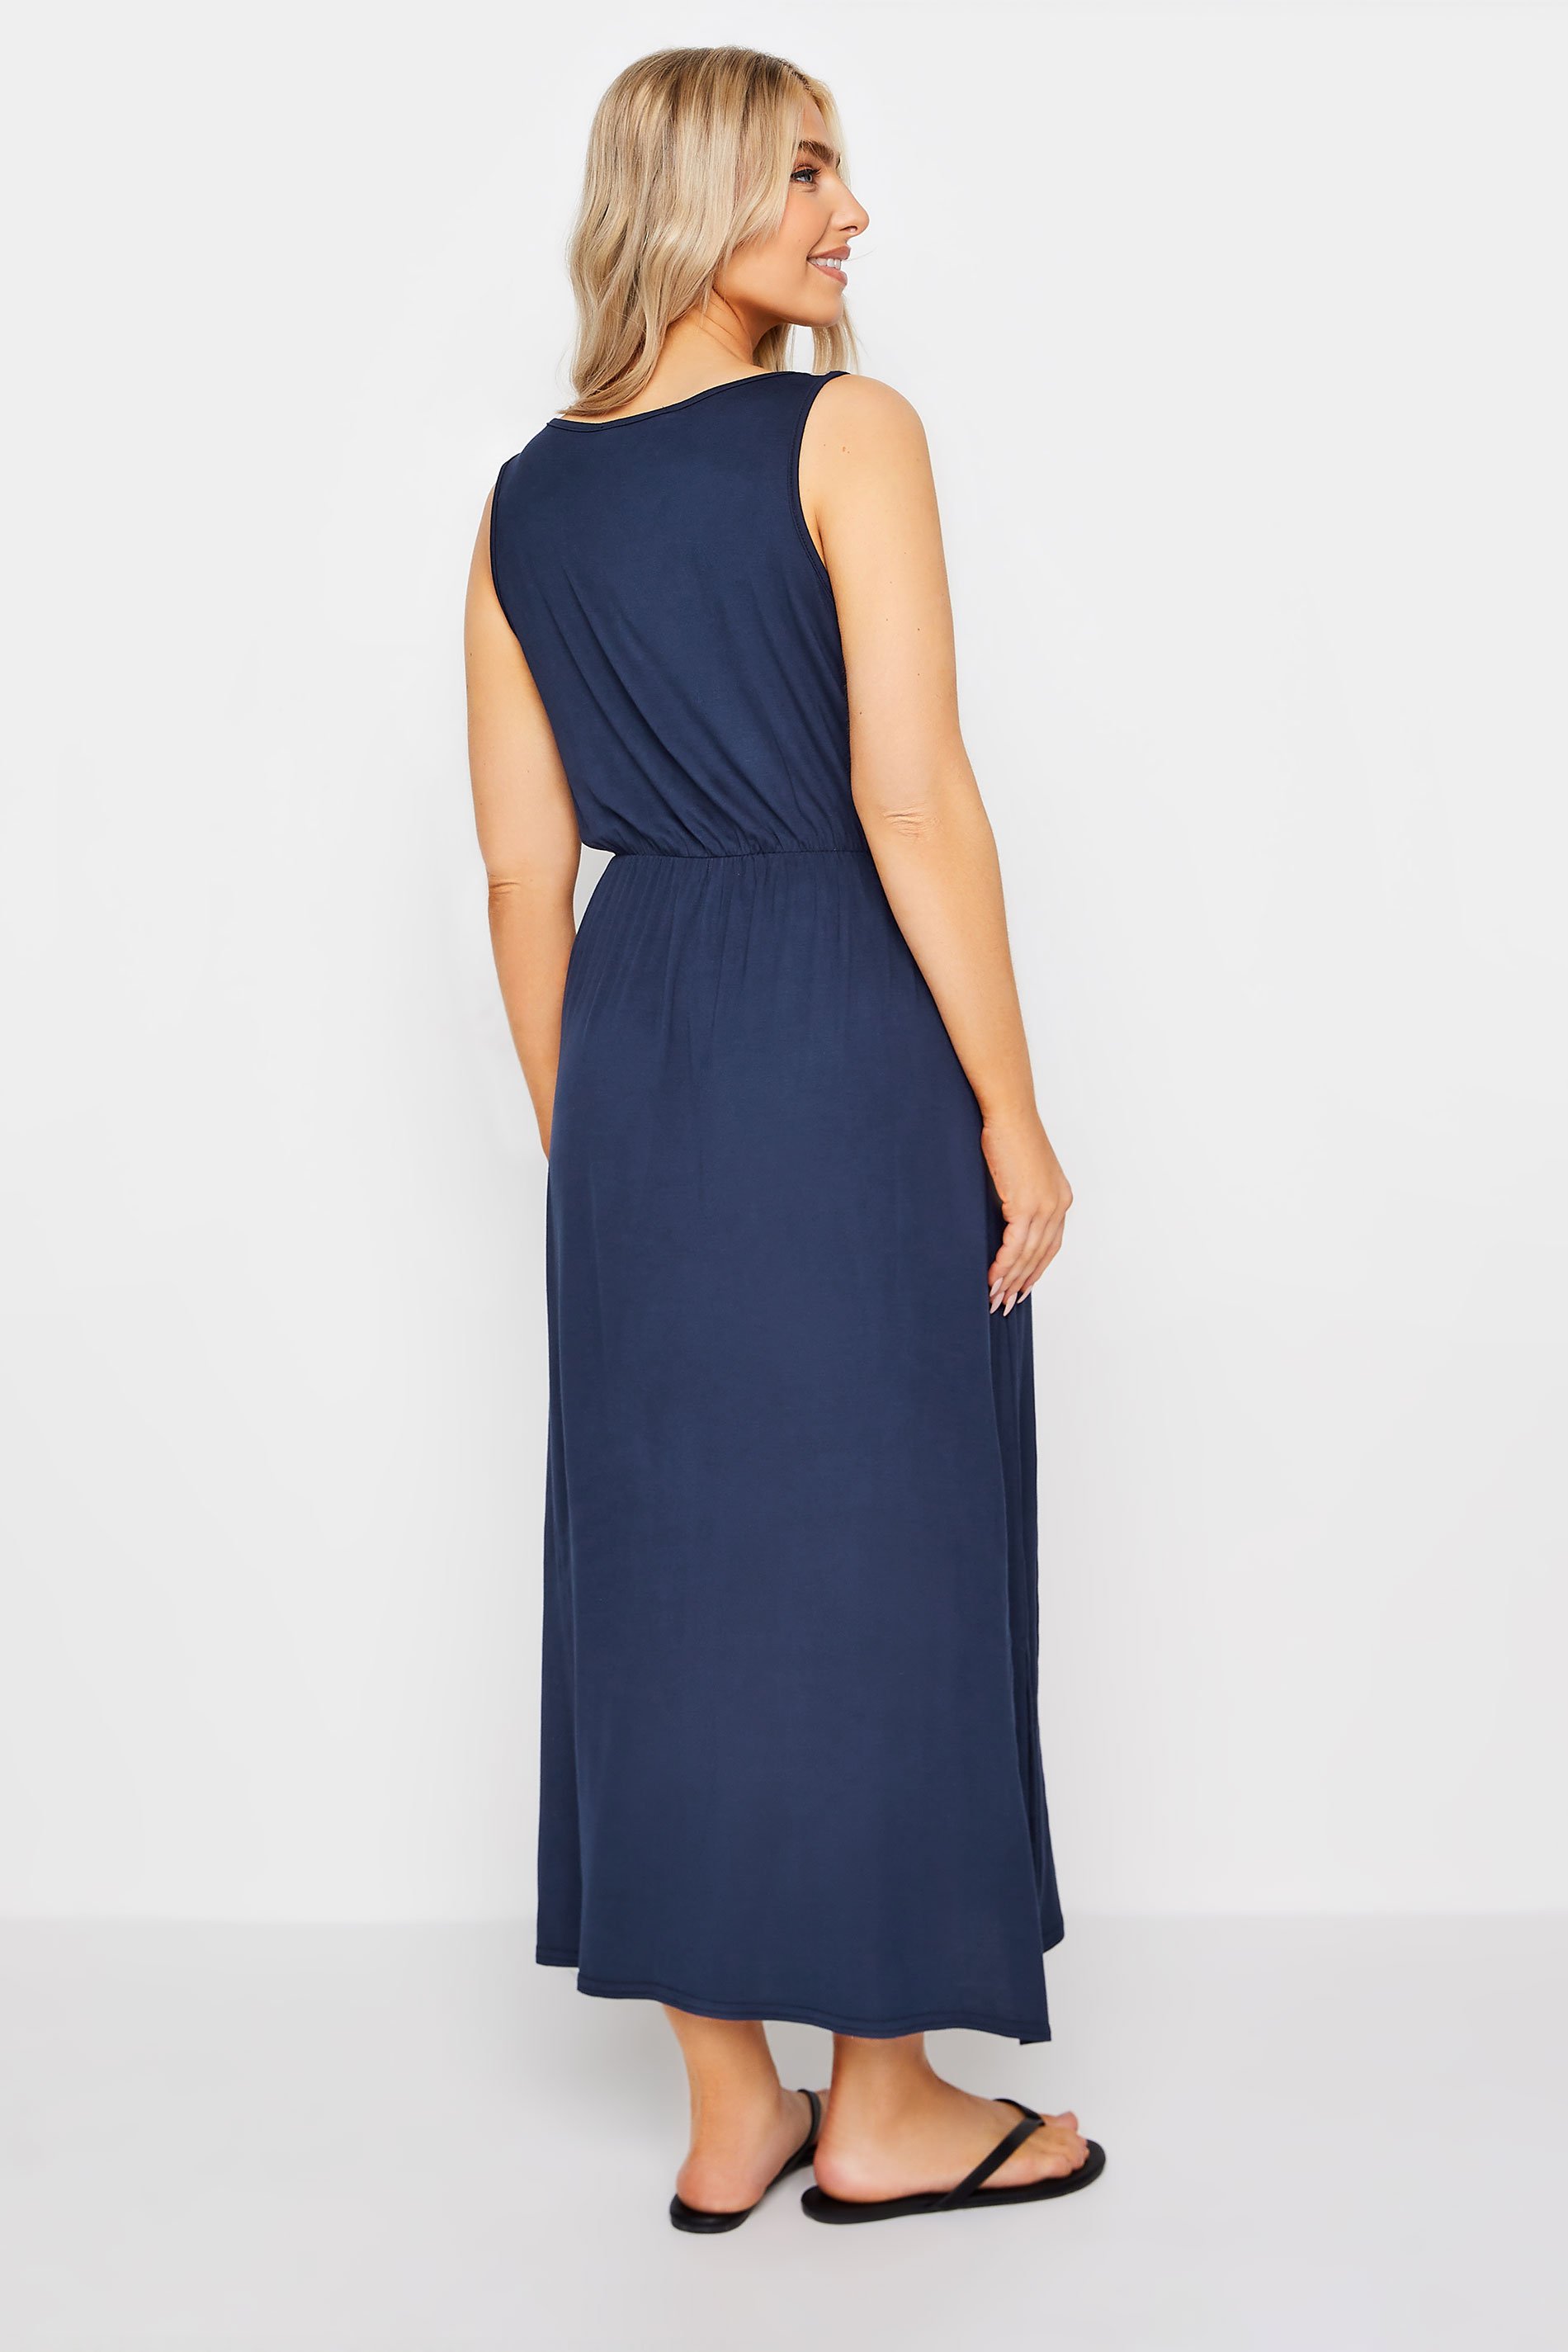 M&Co Navy Blue Scoop Neck Jersey Maxi Dress | M&Co 3